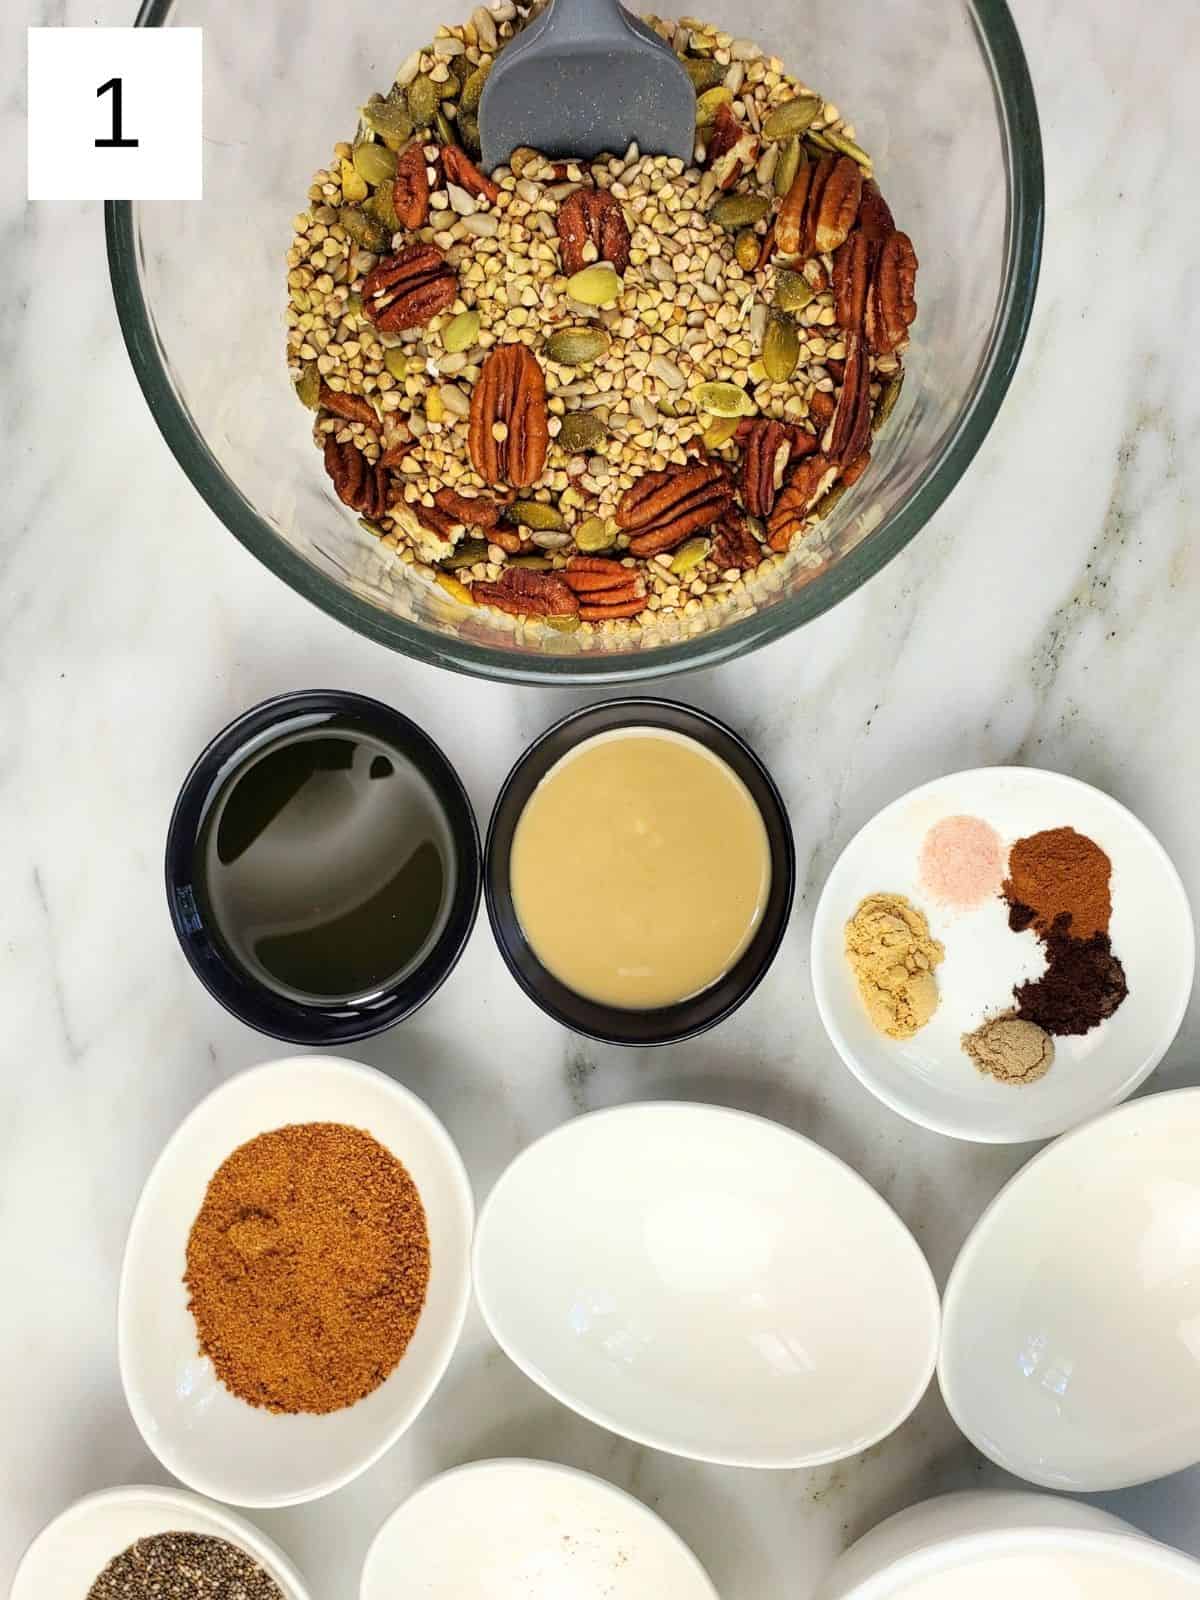 Pecans, puffed buckwheat, pumpkin seeds, and sunflower seeds combined in a bowl.